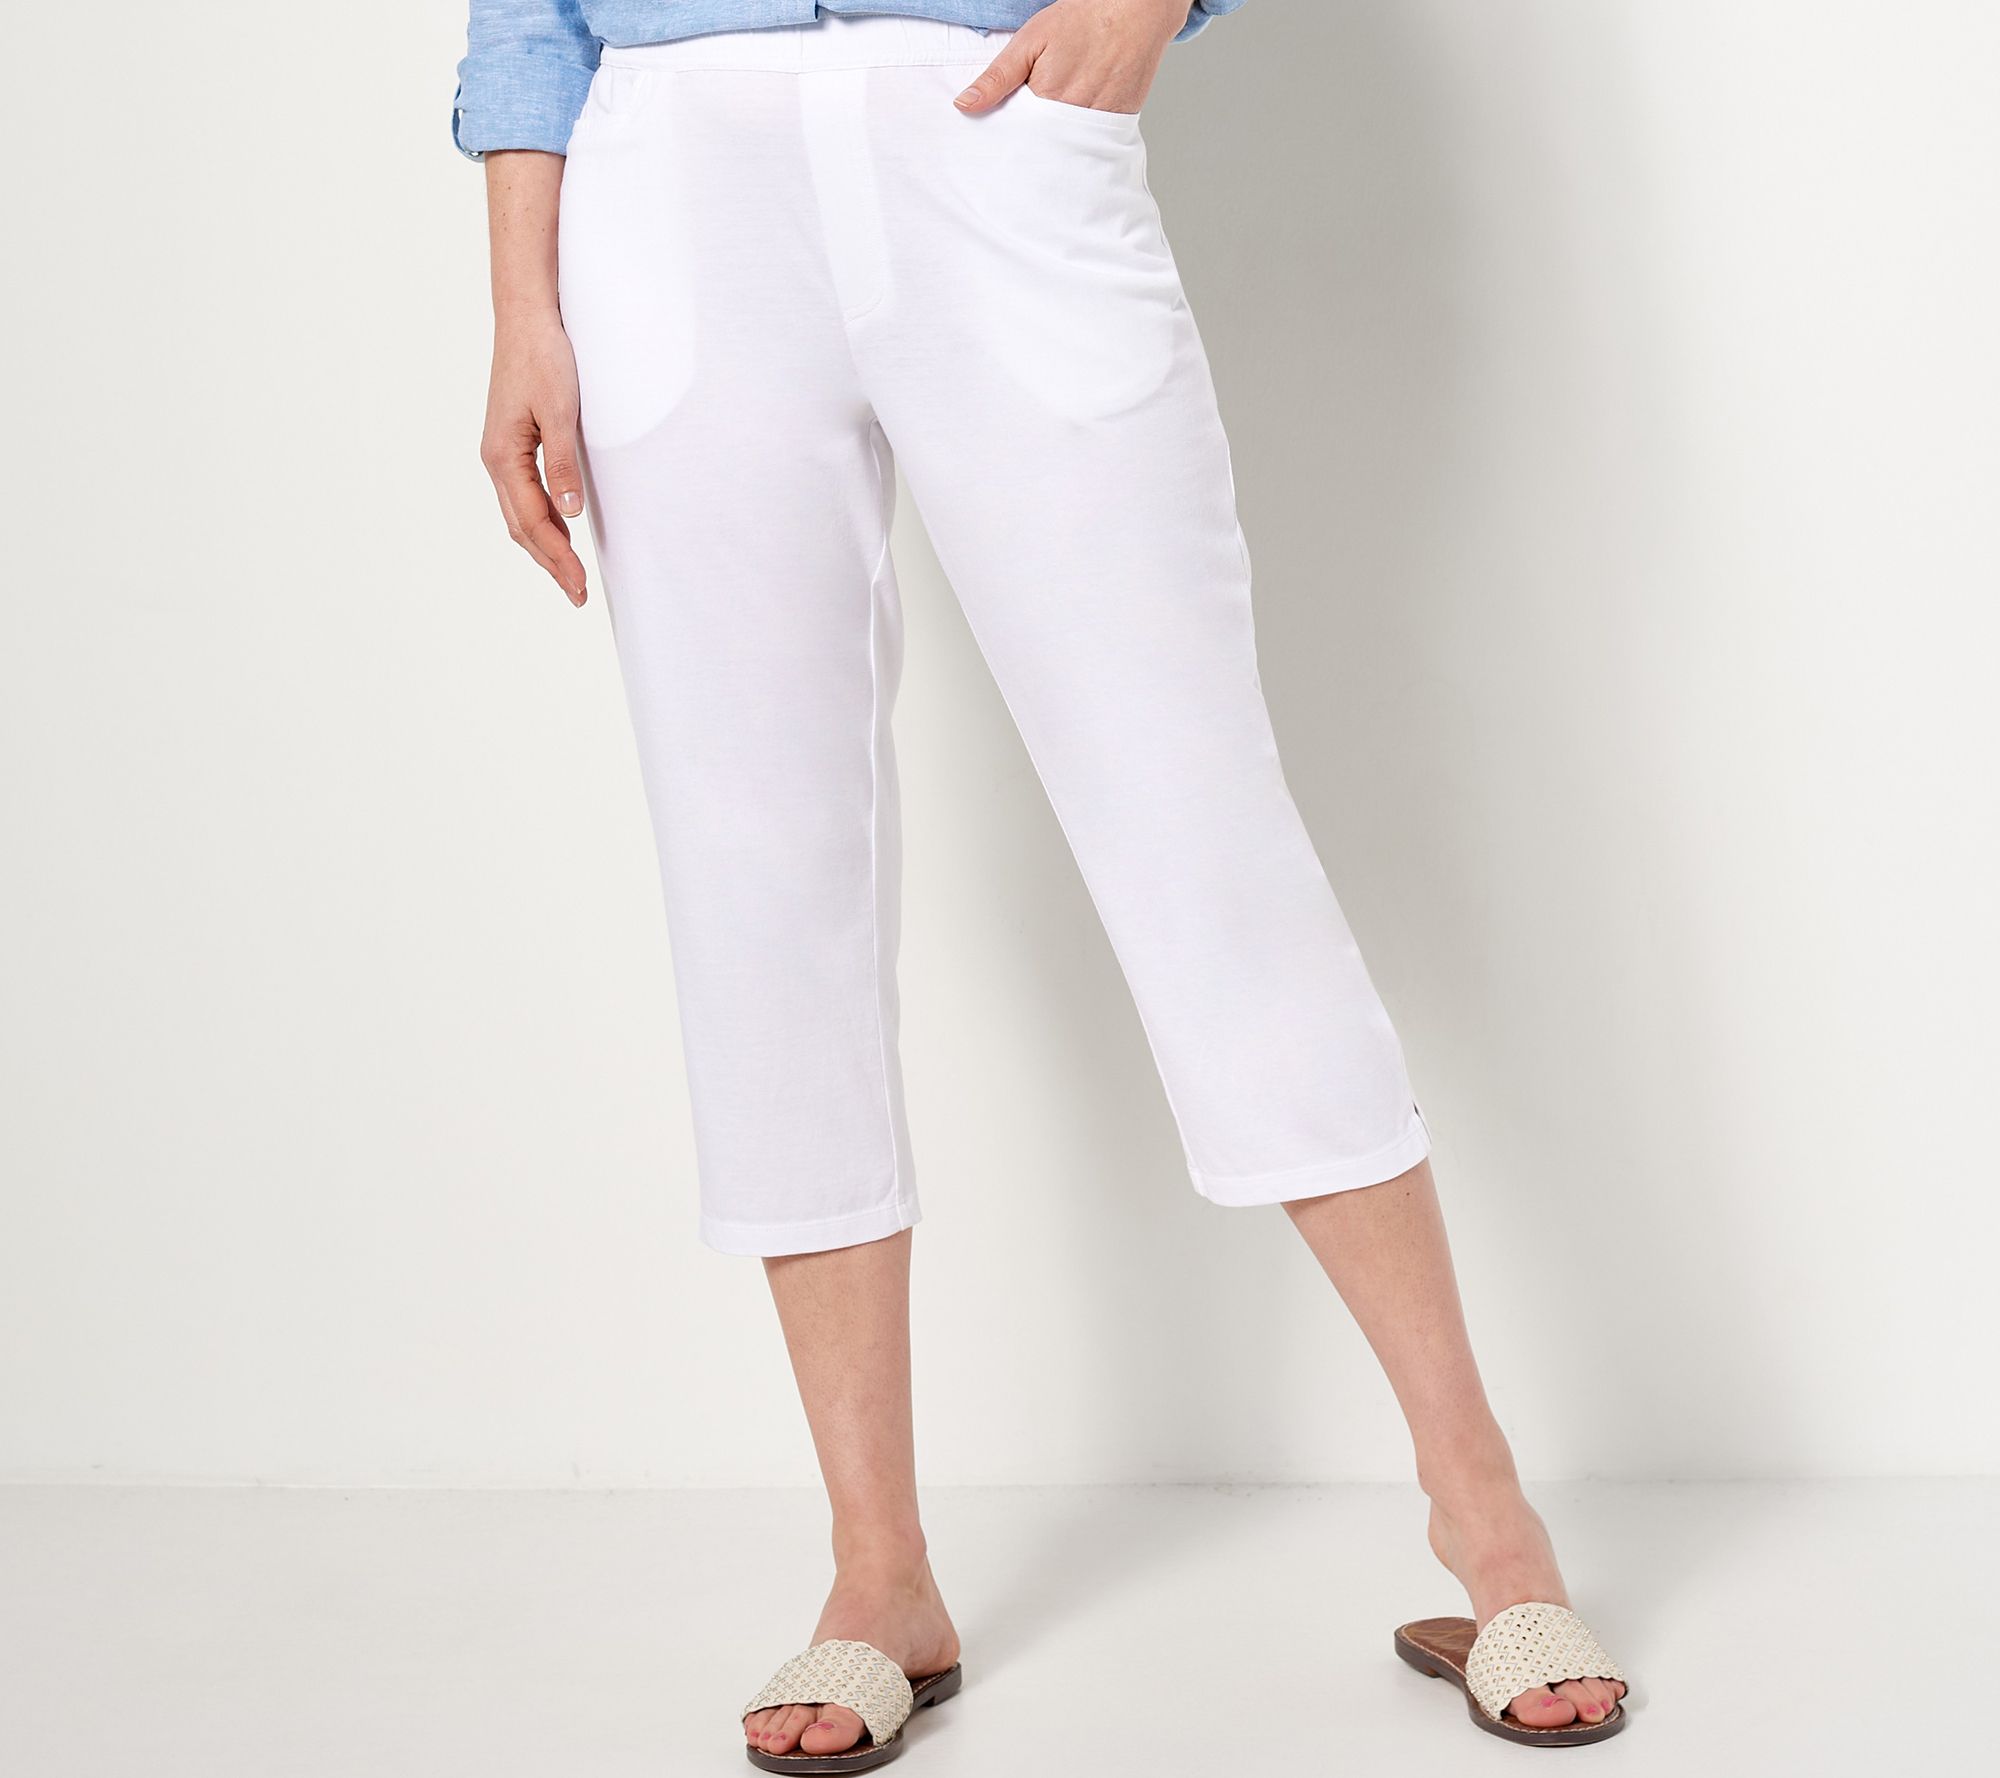 Suzanne Grae Ladies Fashion 3/4 Capri Pants sizes XS Small Medium Large  White